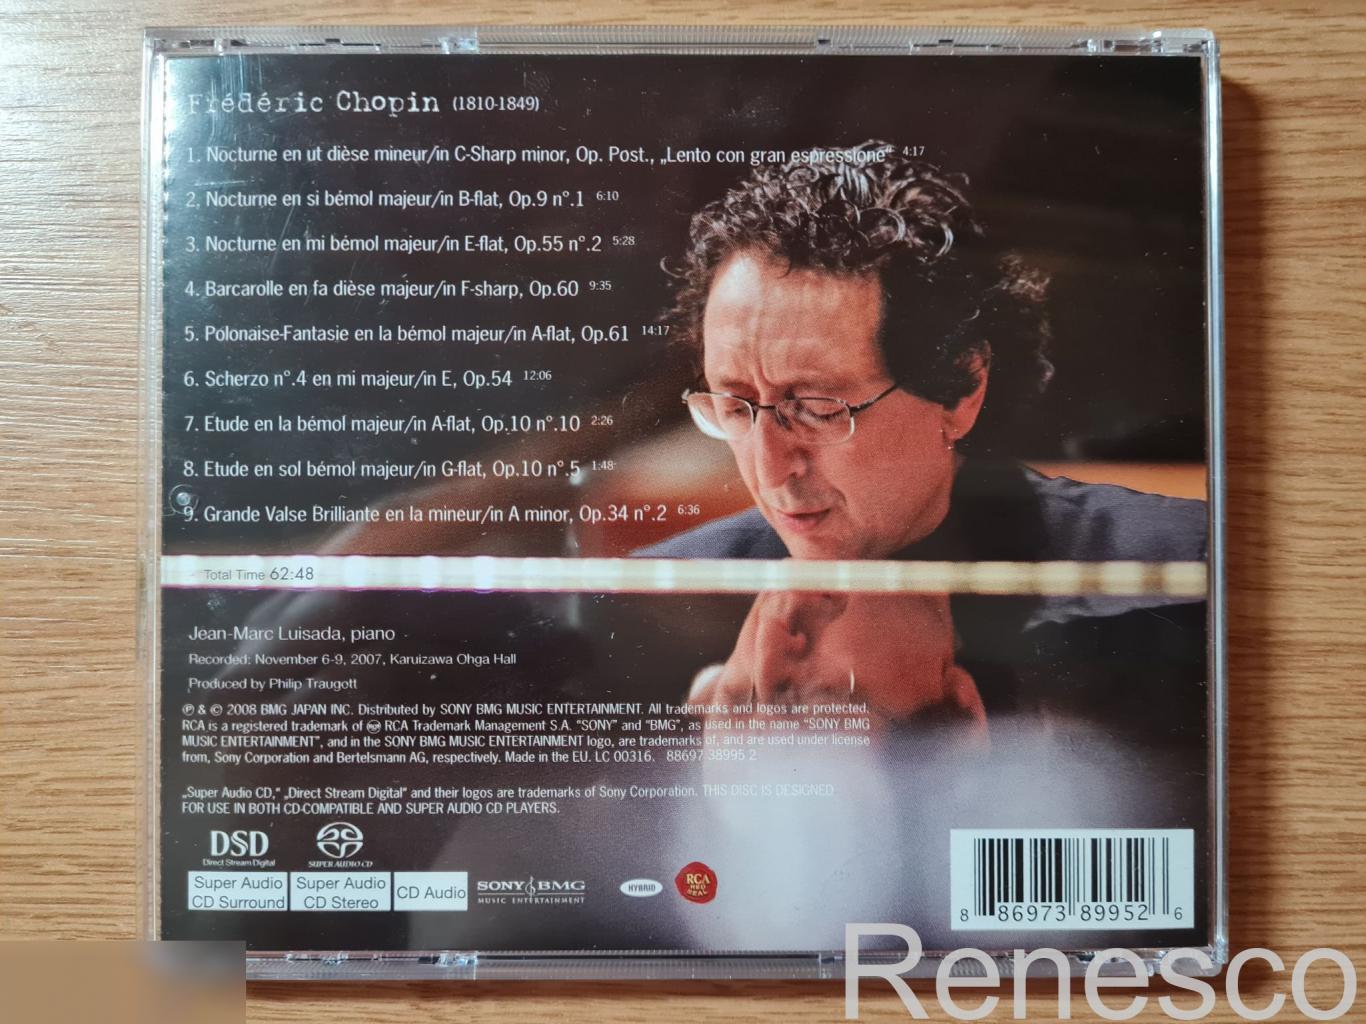 (CD) Jean-Marc Luisada Joue Frederic Chopin (2008) (Europe) 2